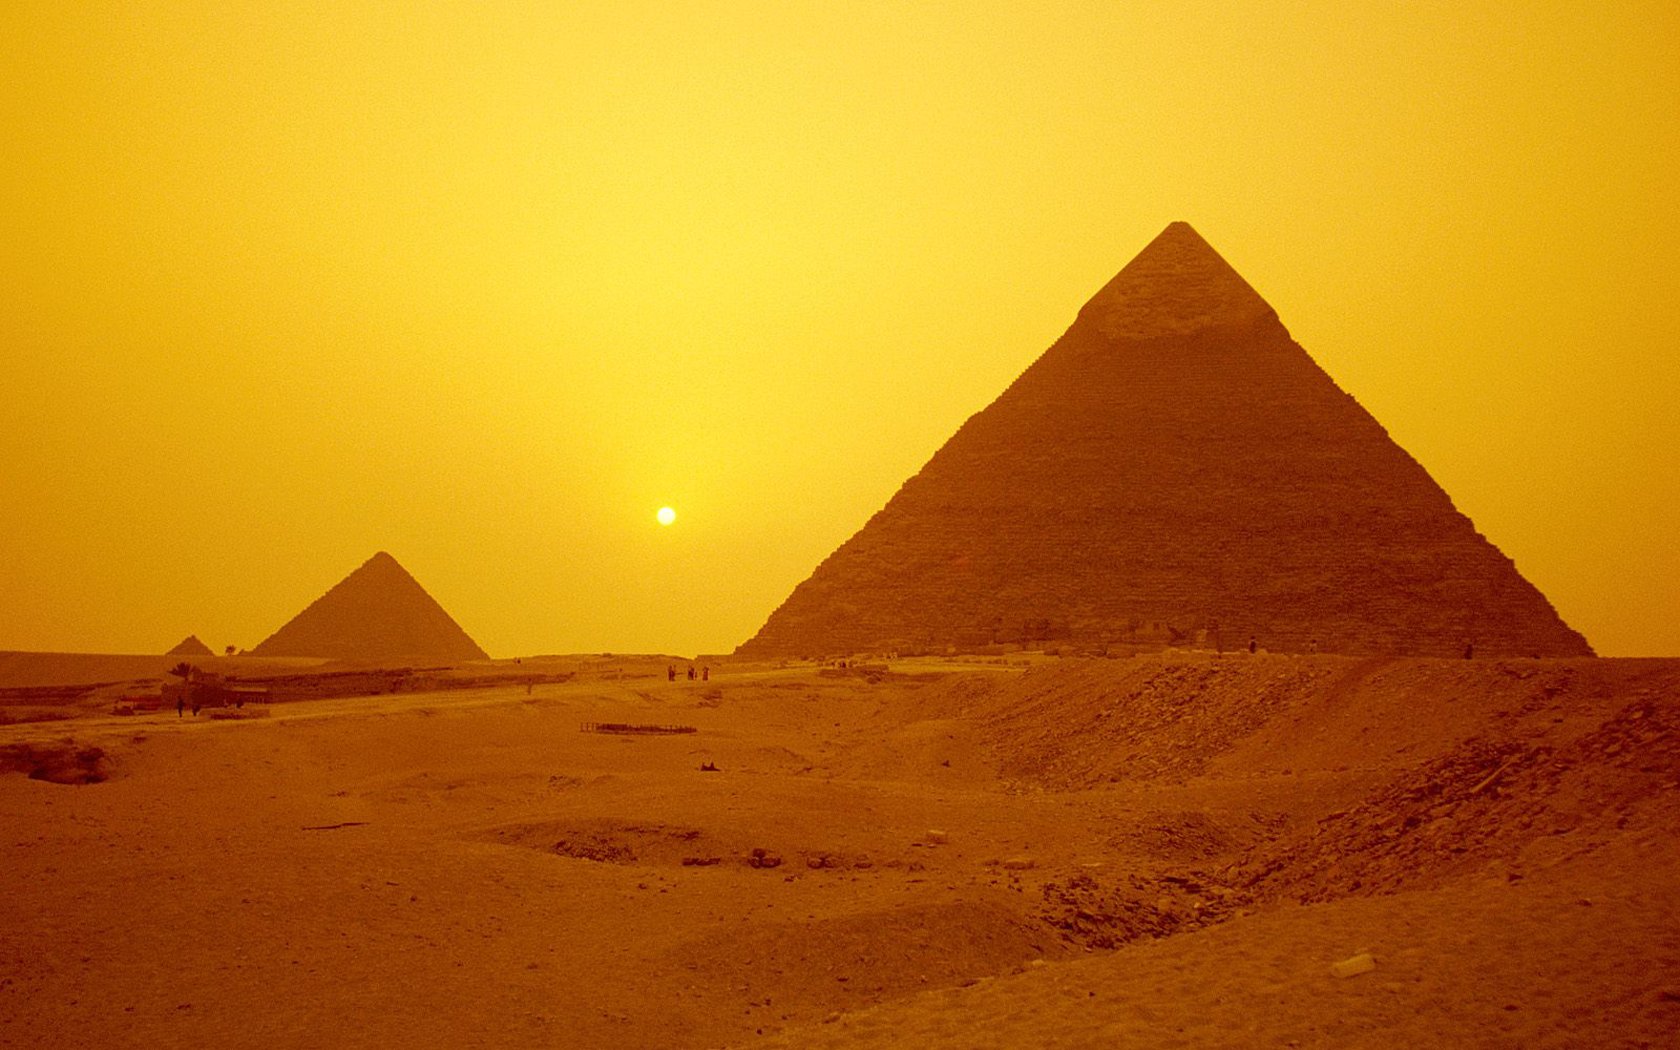 67+] Egypt Background - WallpaperSafari